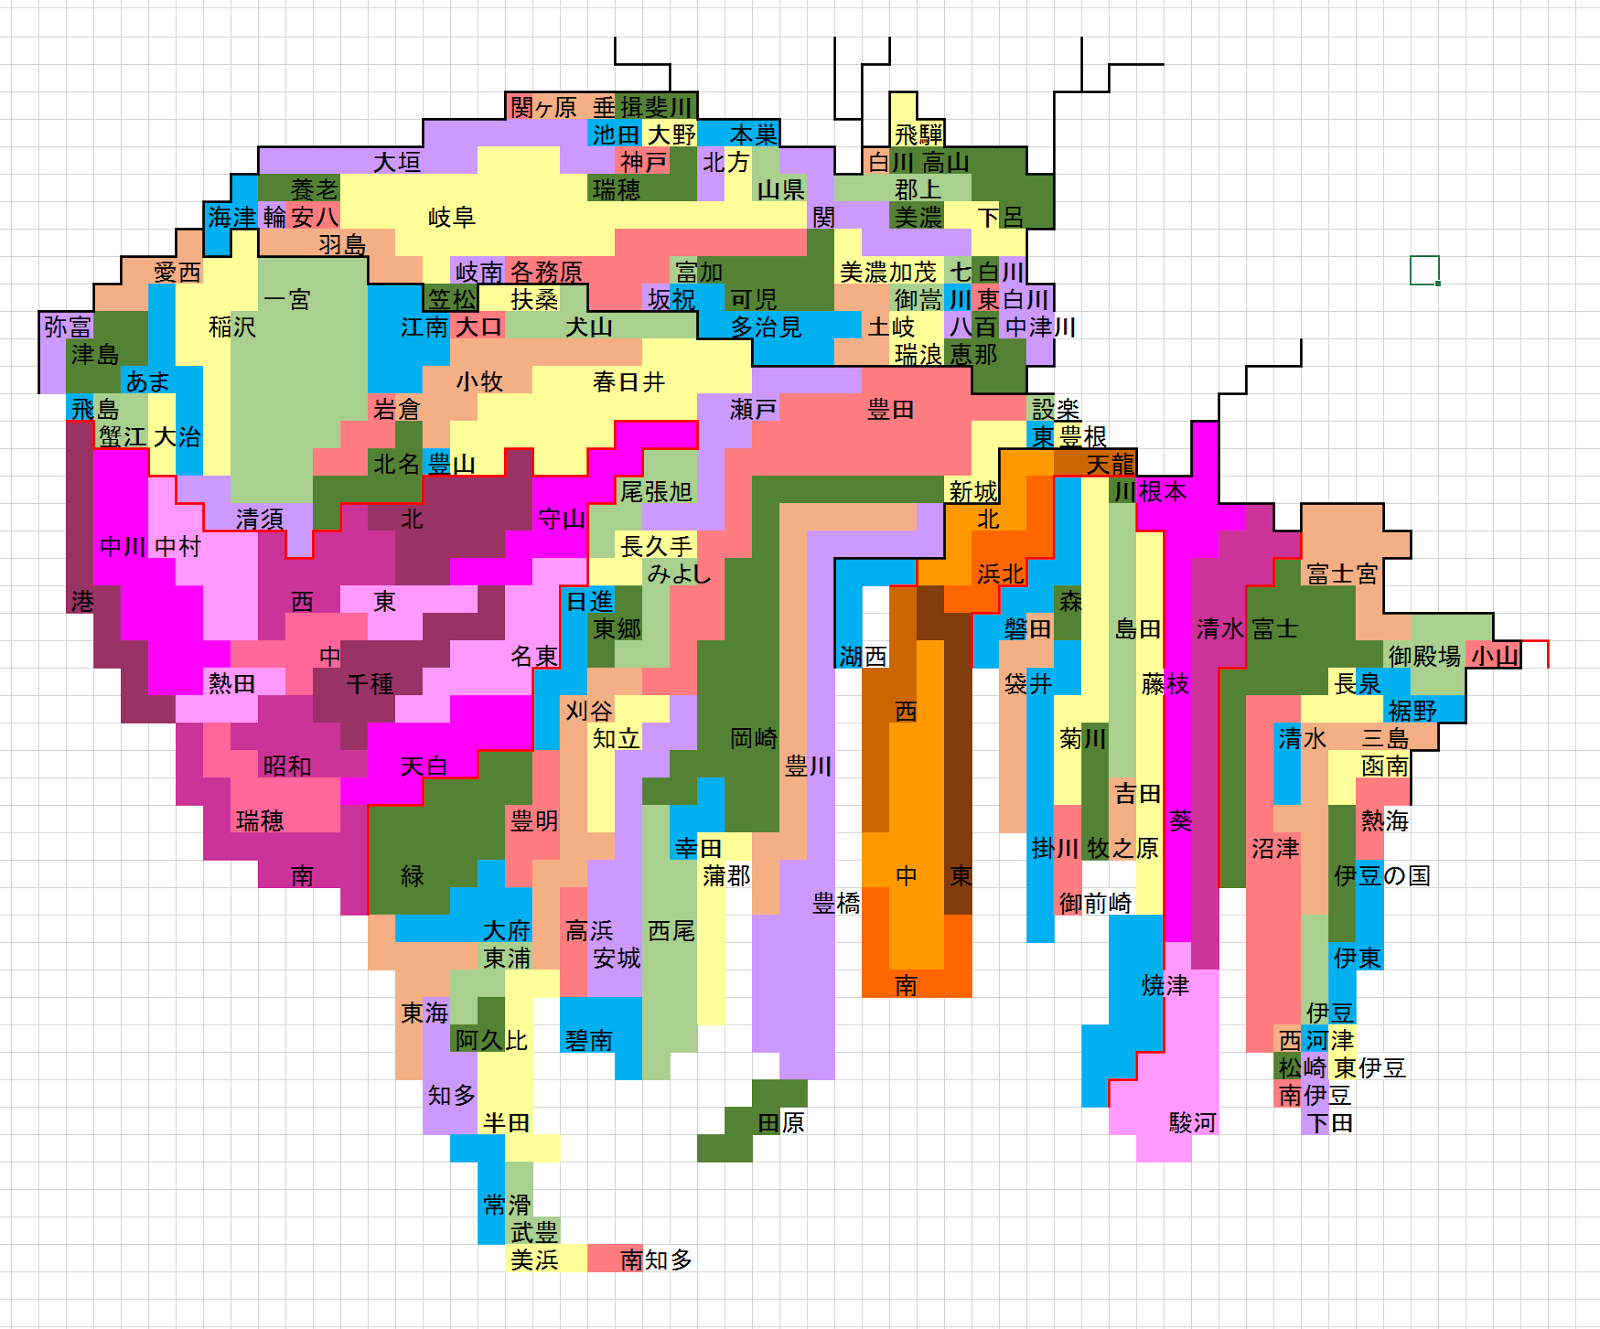 Simpleways 日本の人口分布 市町村別 面積地図 東海地方版